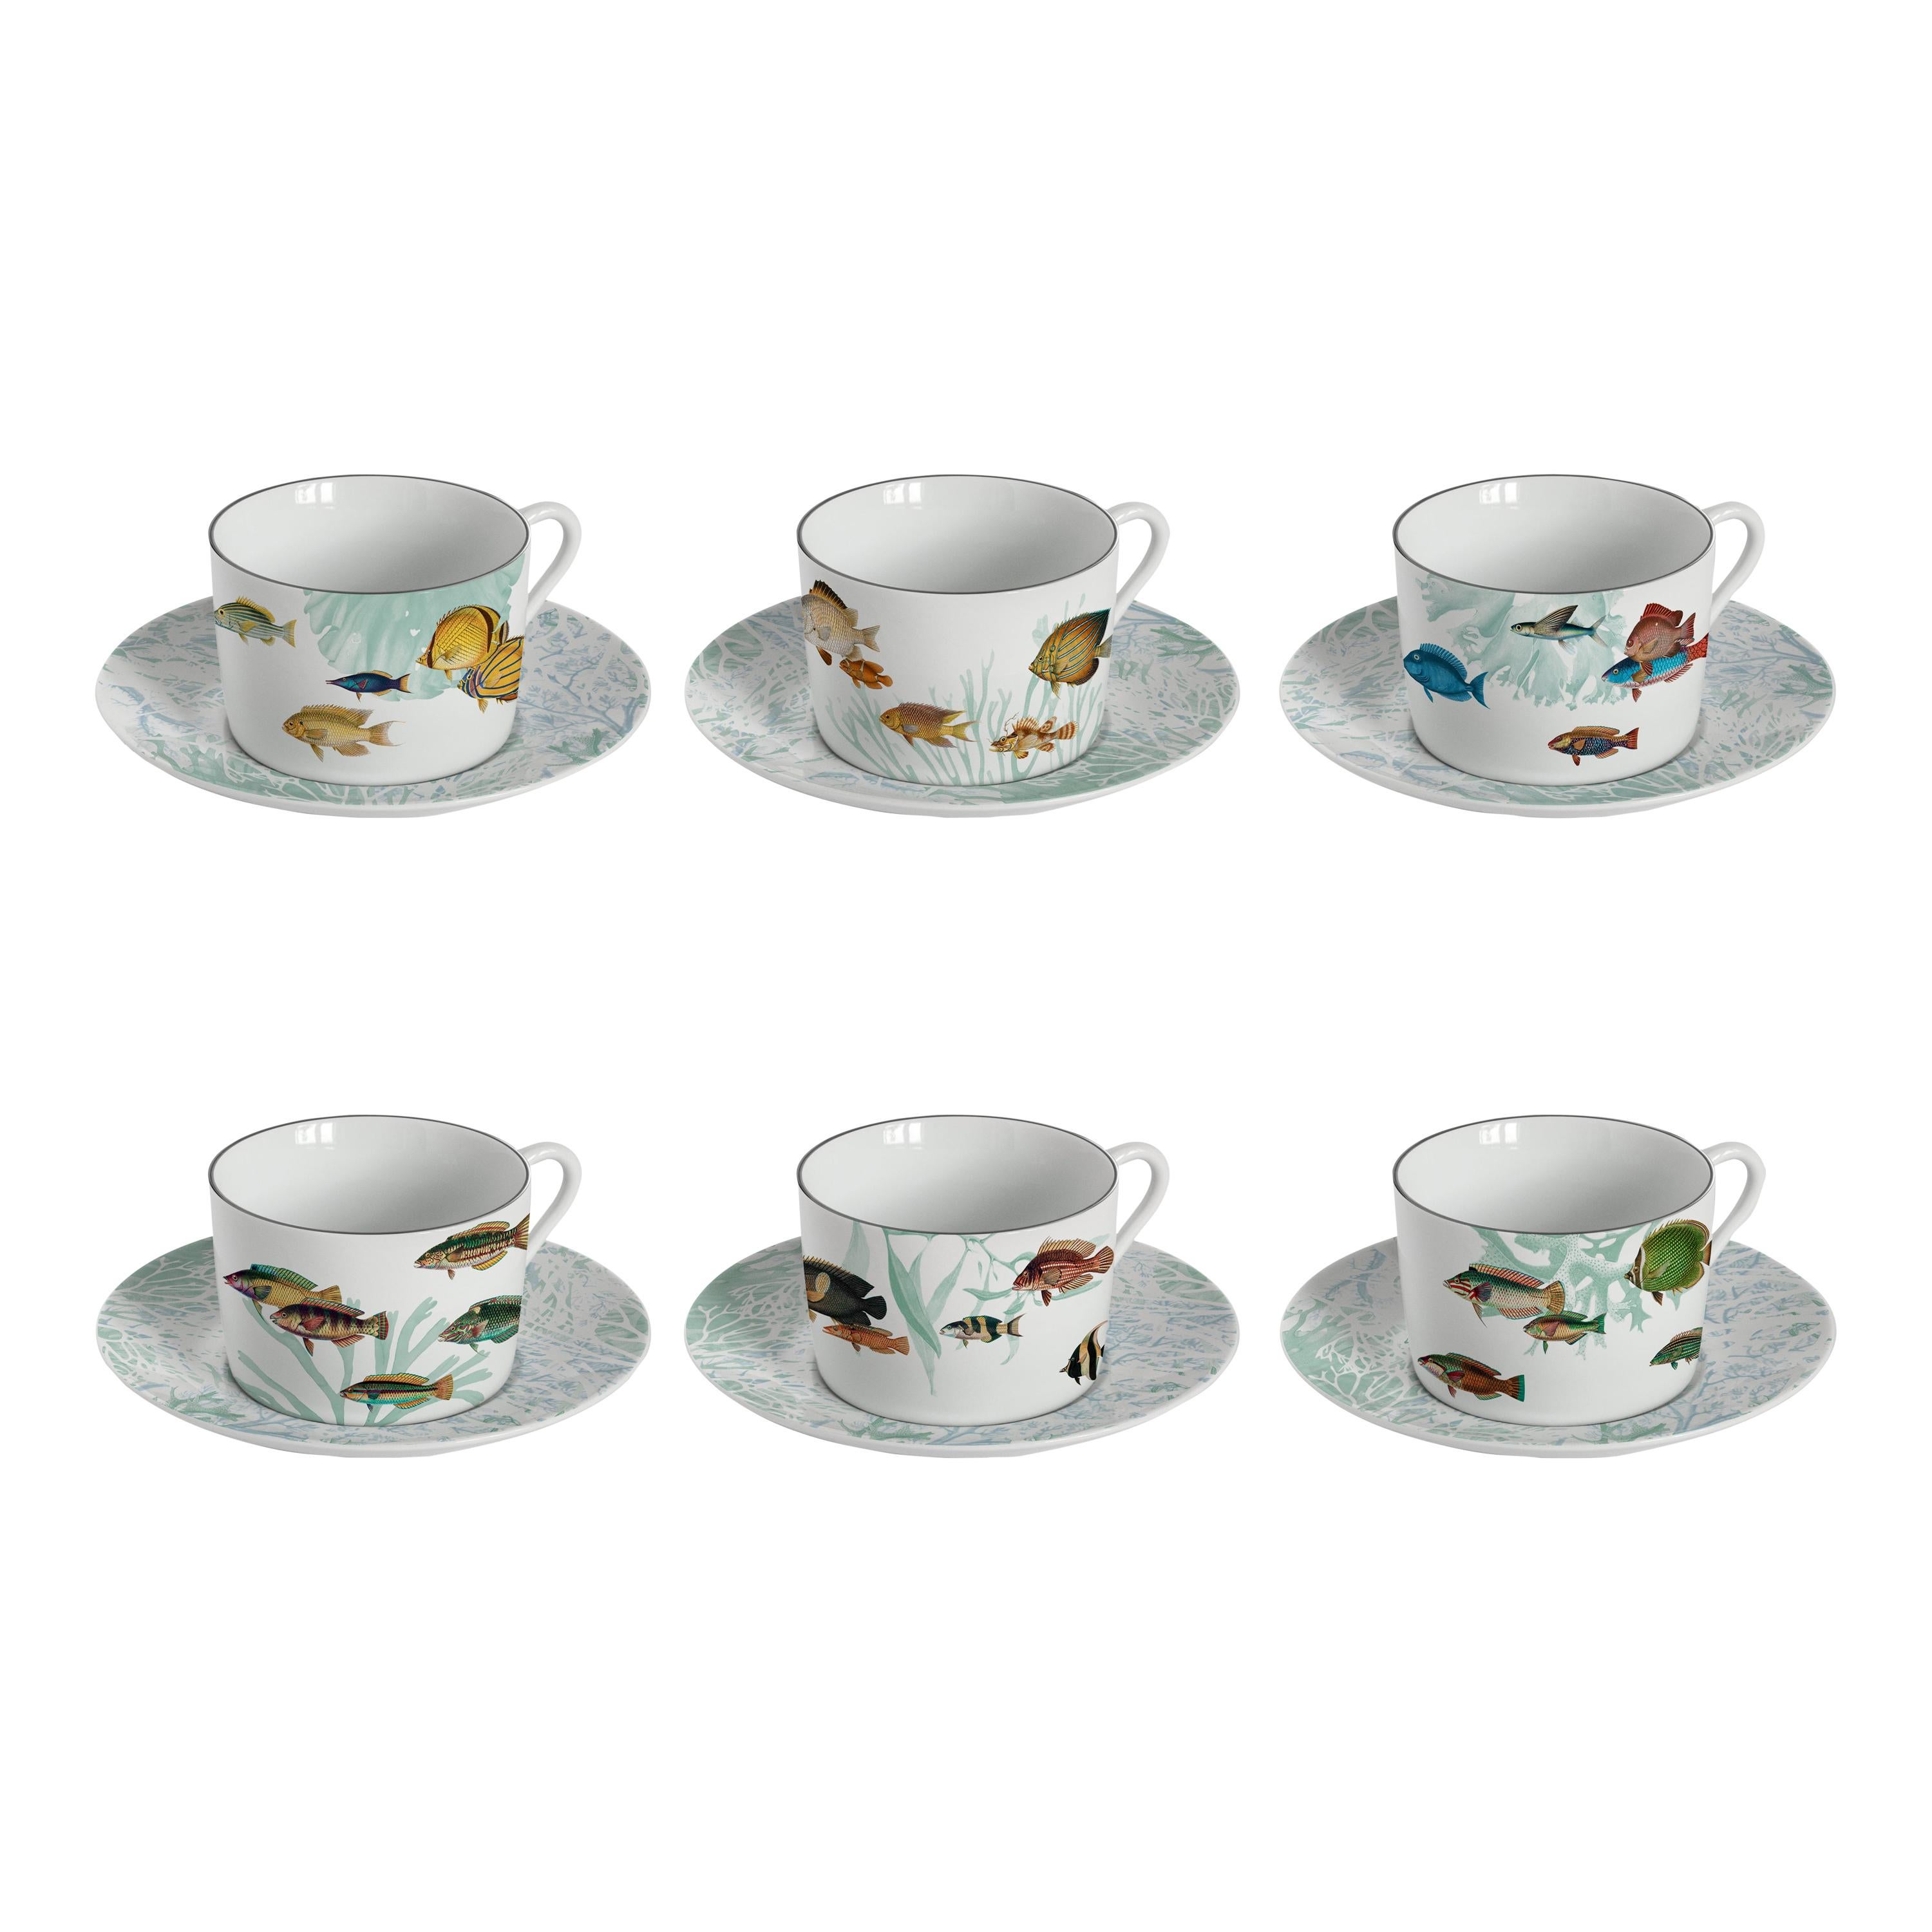 Amami, Tea Set with Six Contemporary Porcelains with Decorative Design